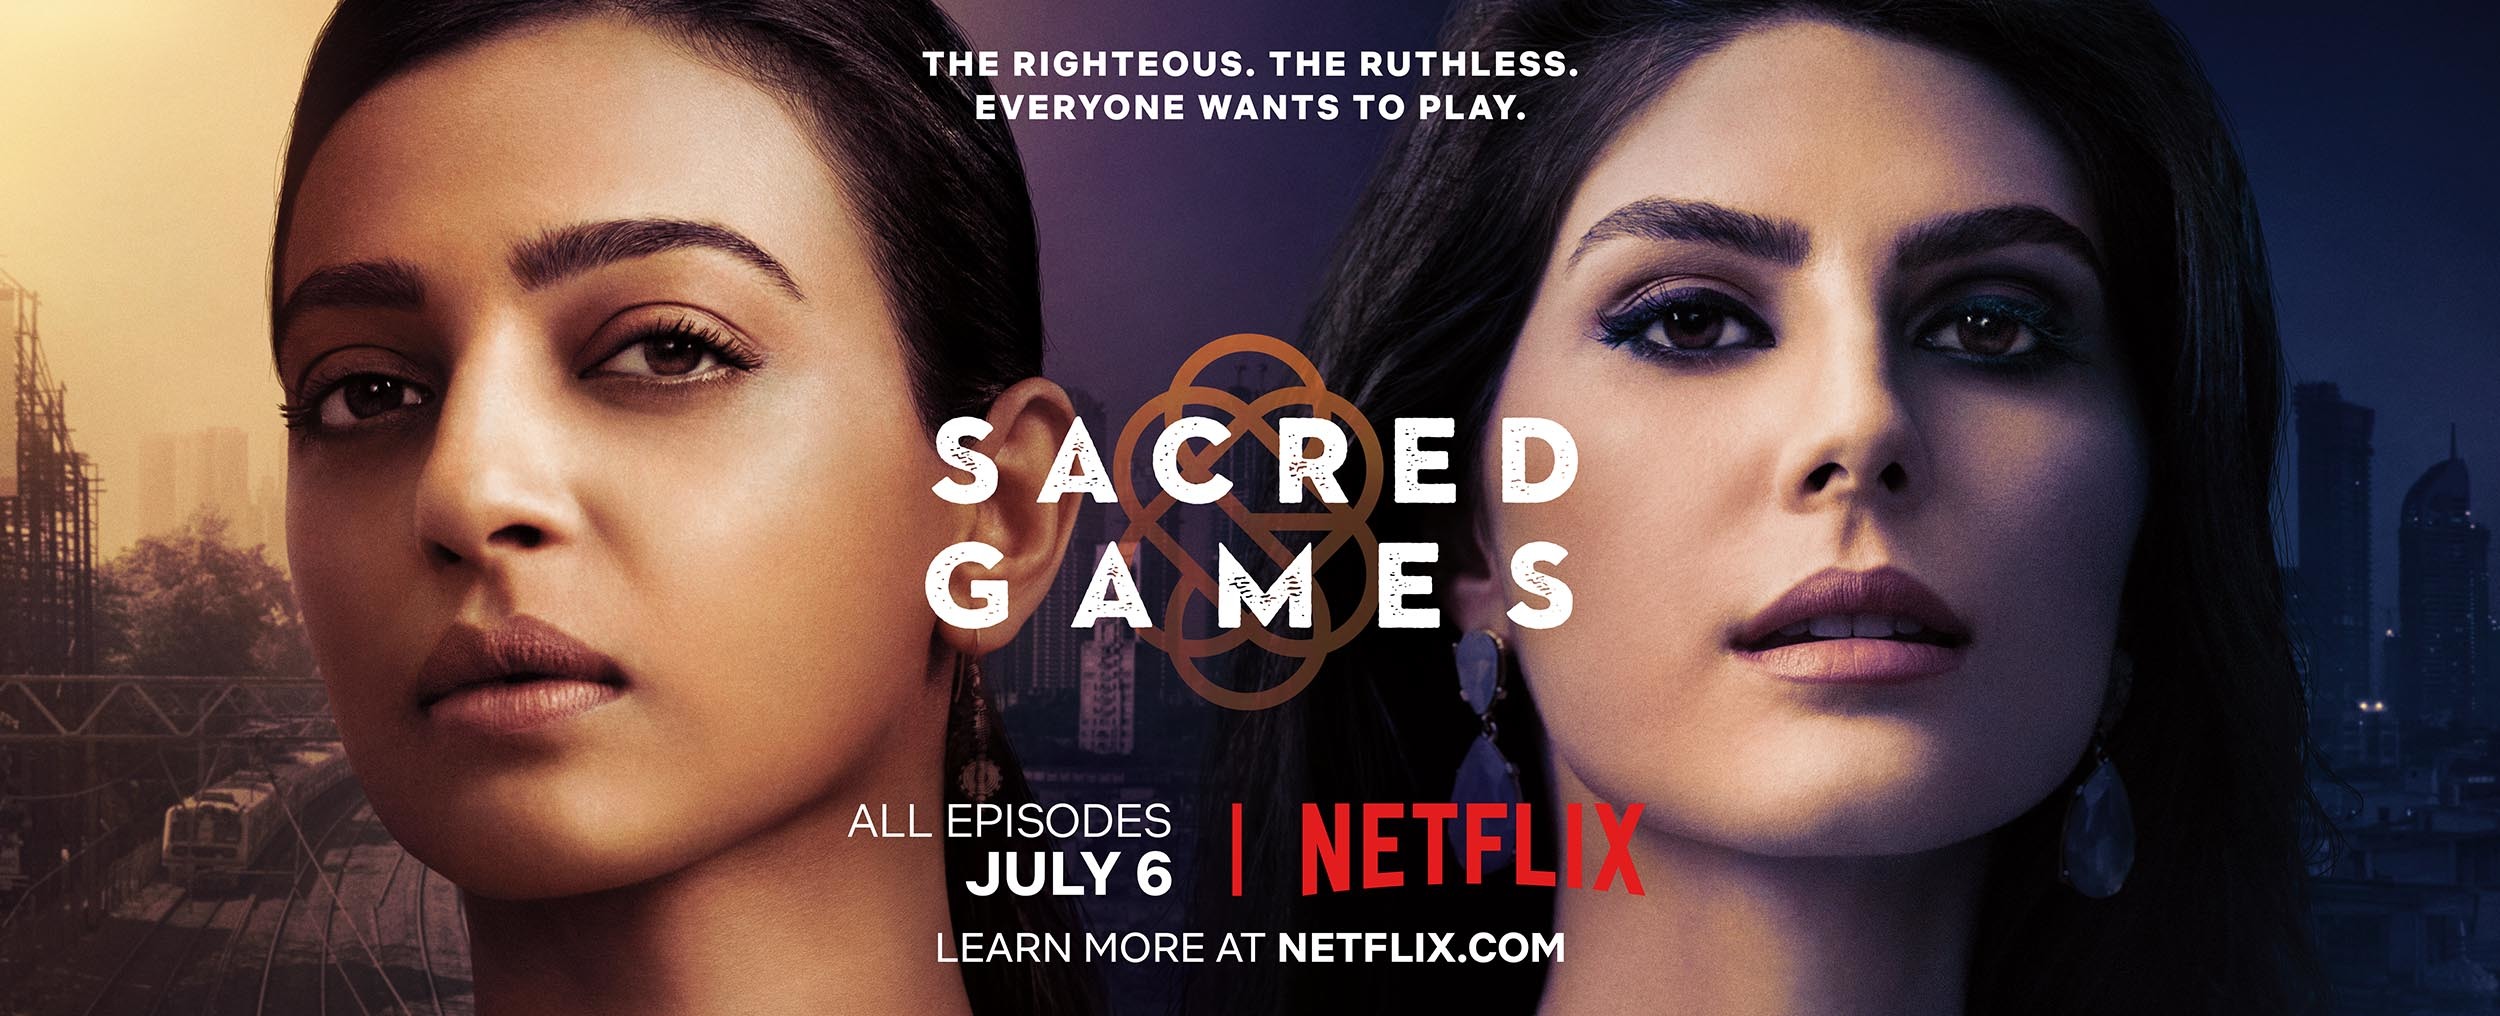 Mega Sized TV Poster Image for Sacred Games (#14 of 20)